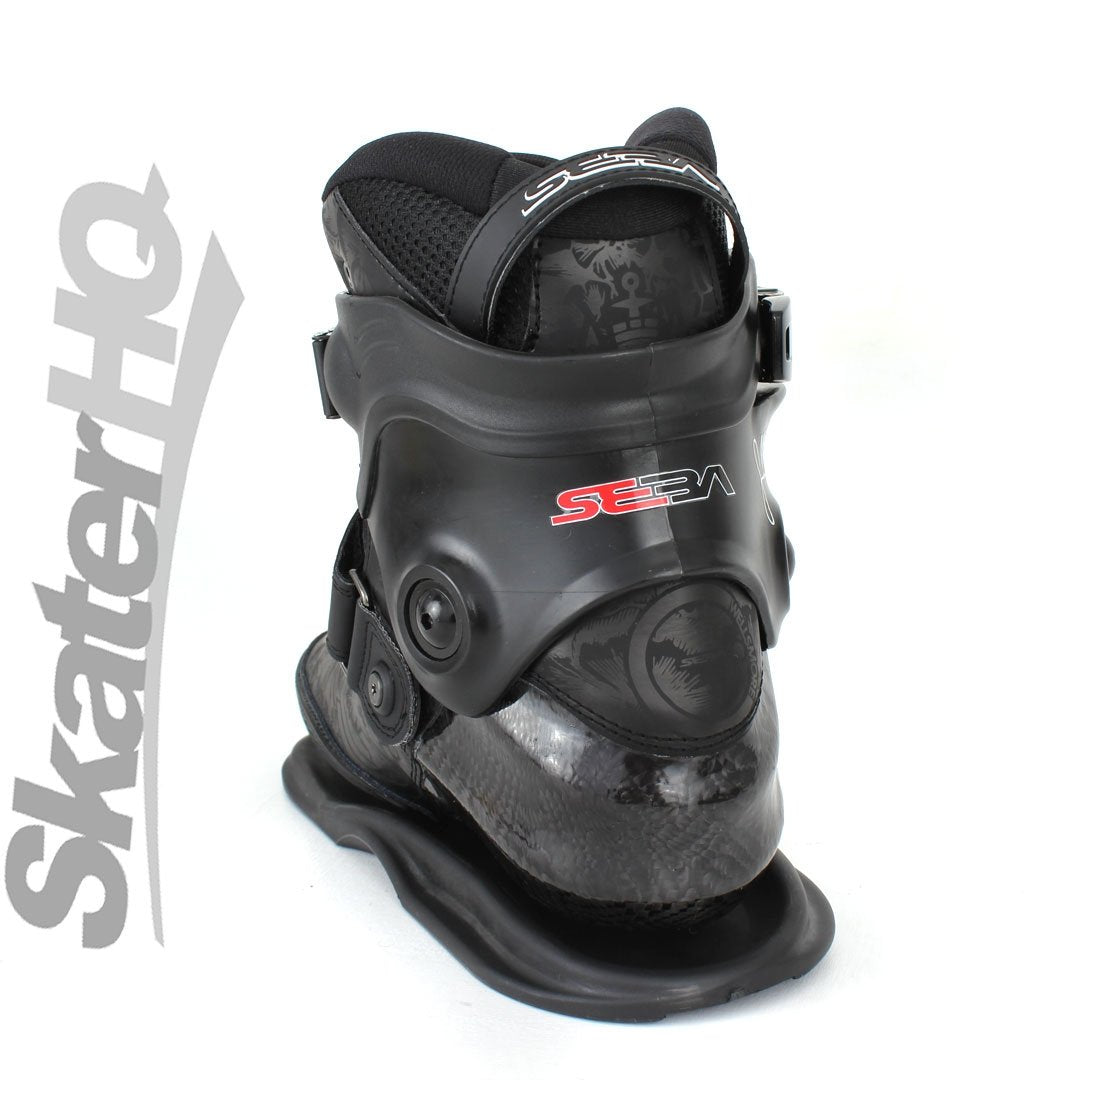 SEBA CJ Pro Skate Carbon BOOT 9US/EU42 Inline Aggressive Skates